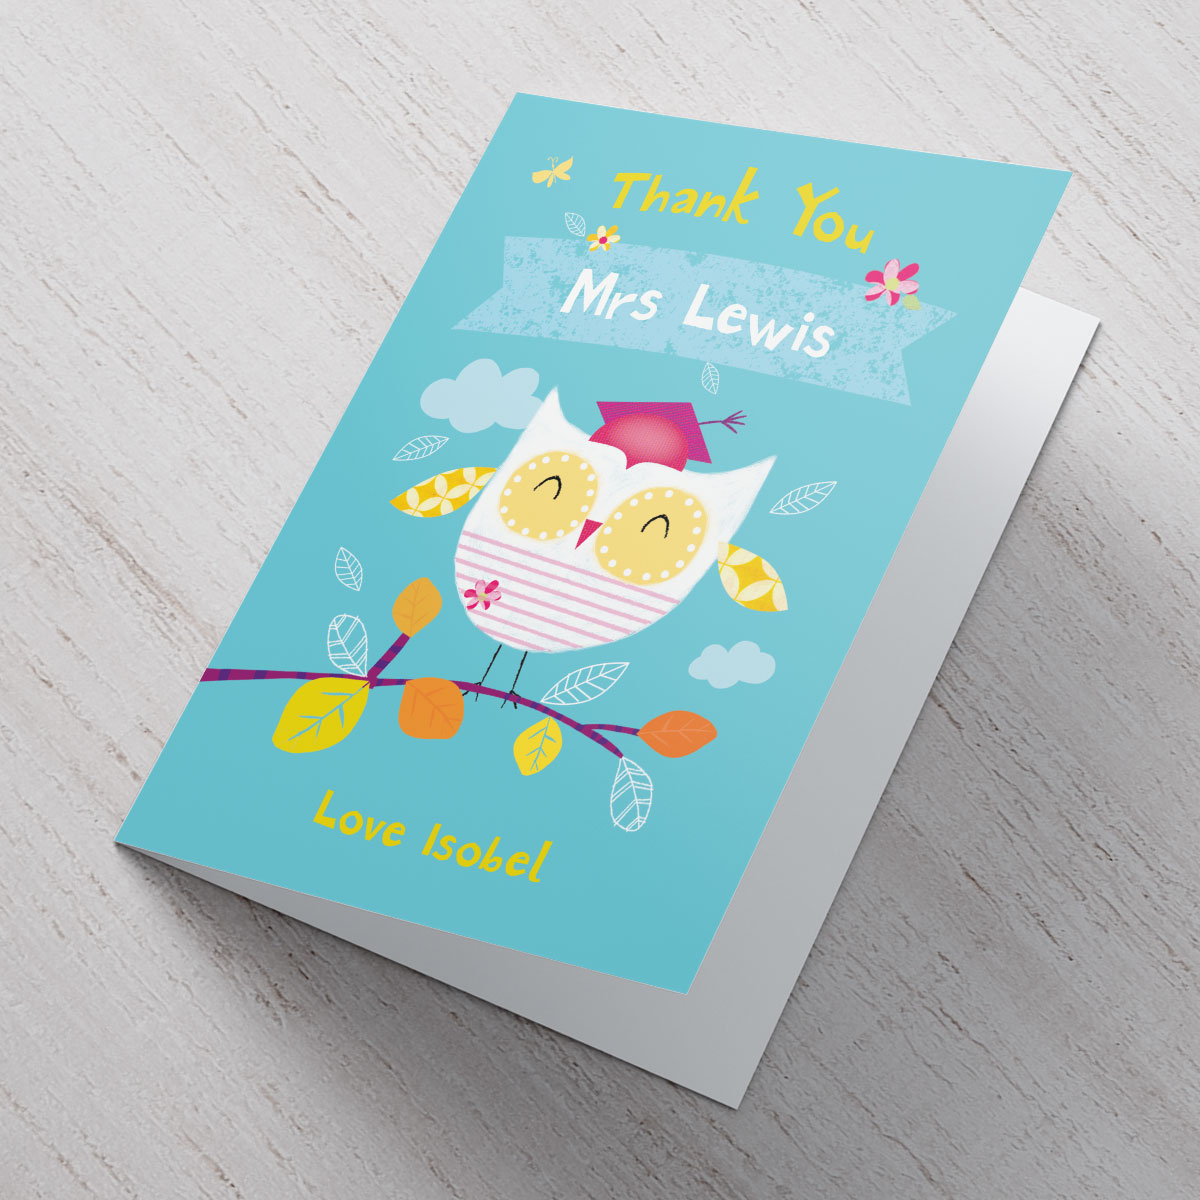 Personalised Card - Best Teacher - White Owl